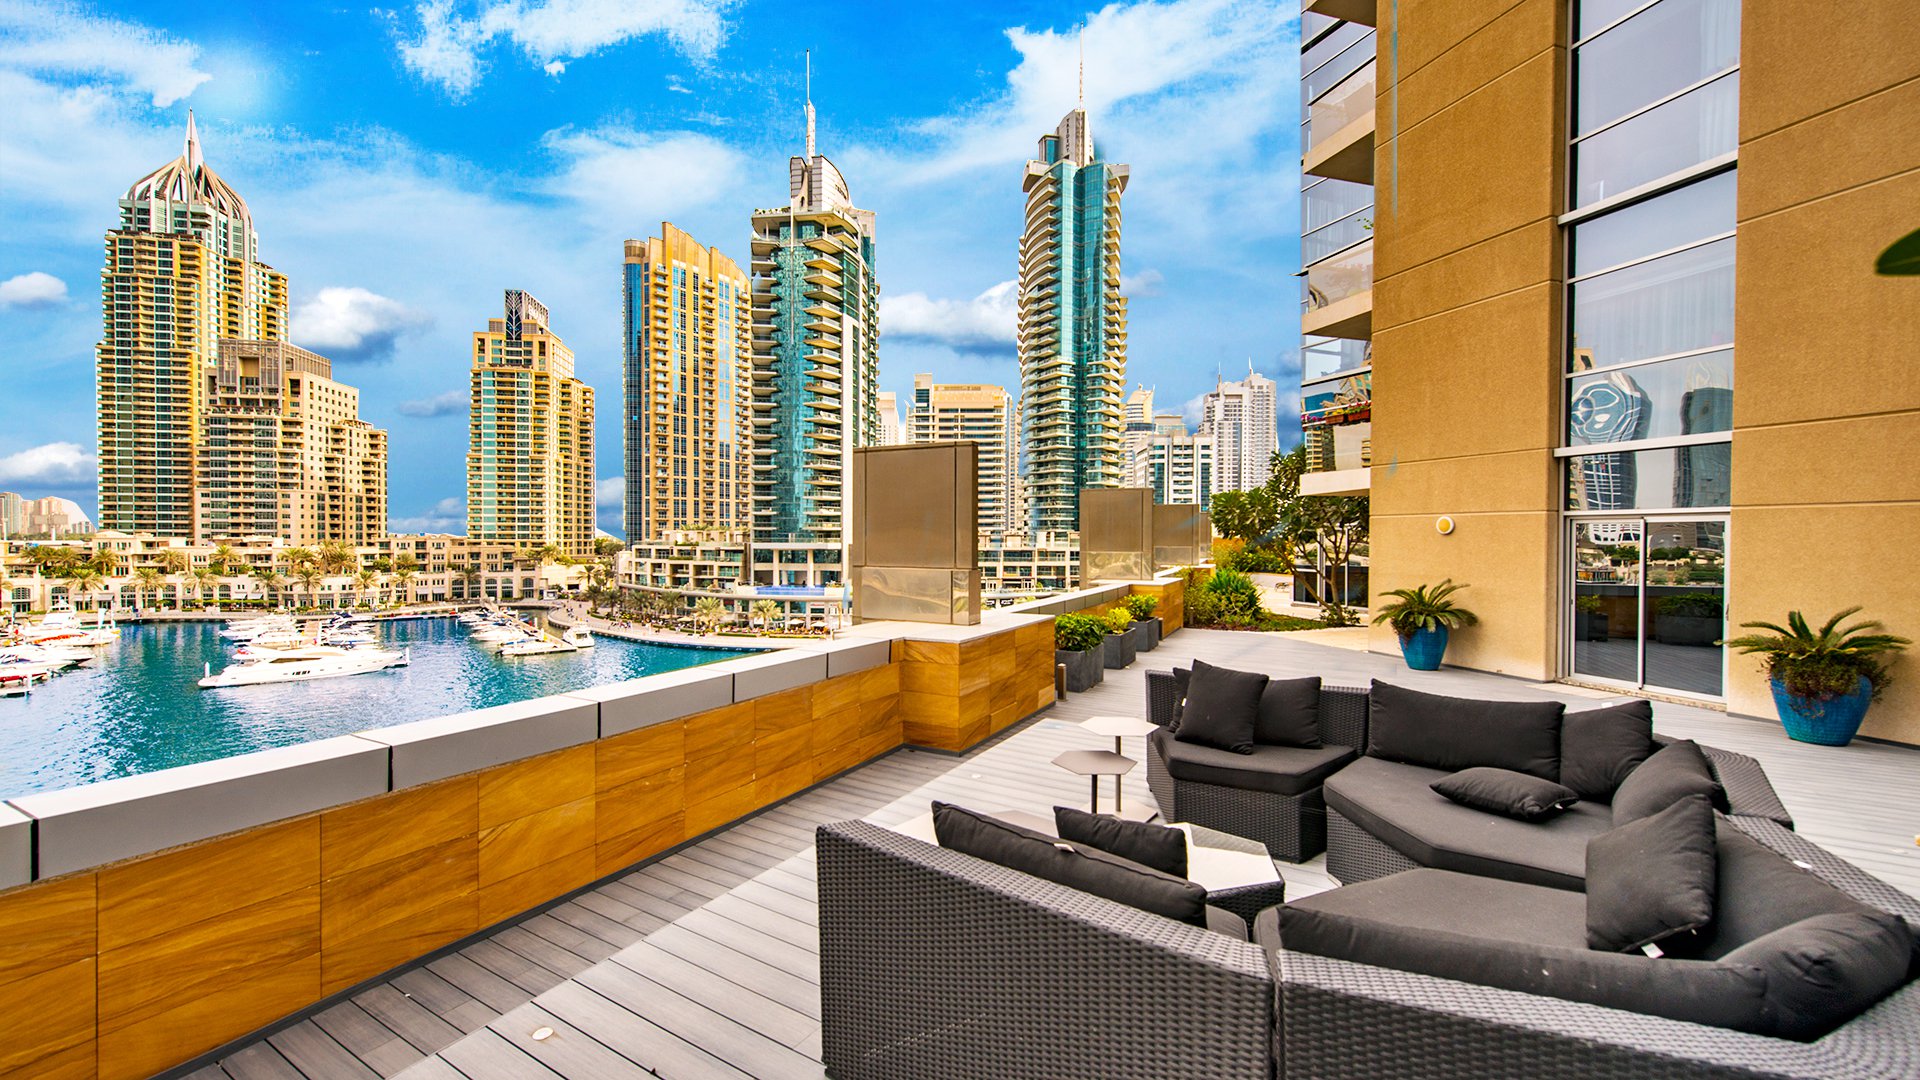 Luxury to Budget Breaking Down Dubai's Property Market